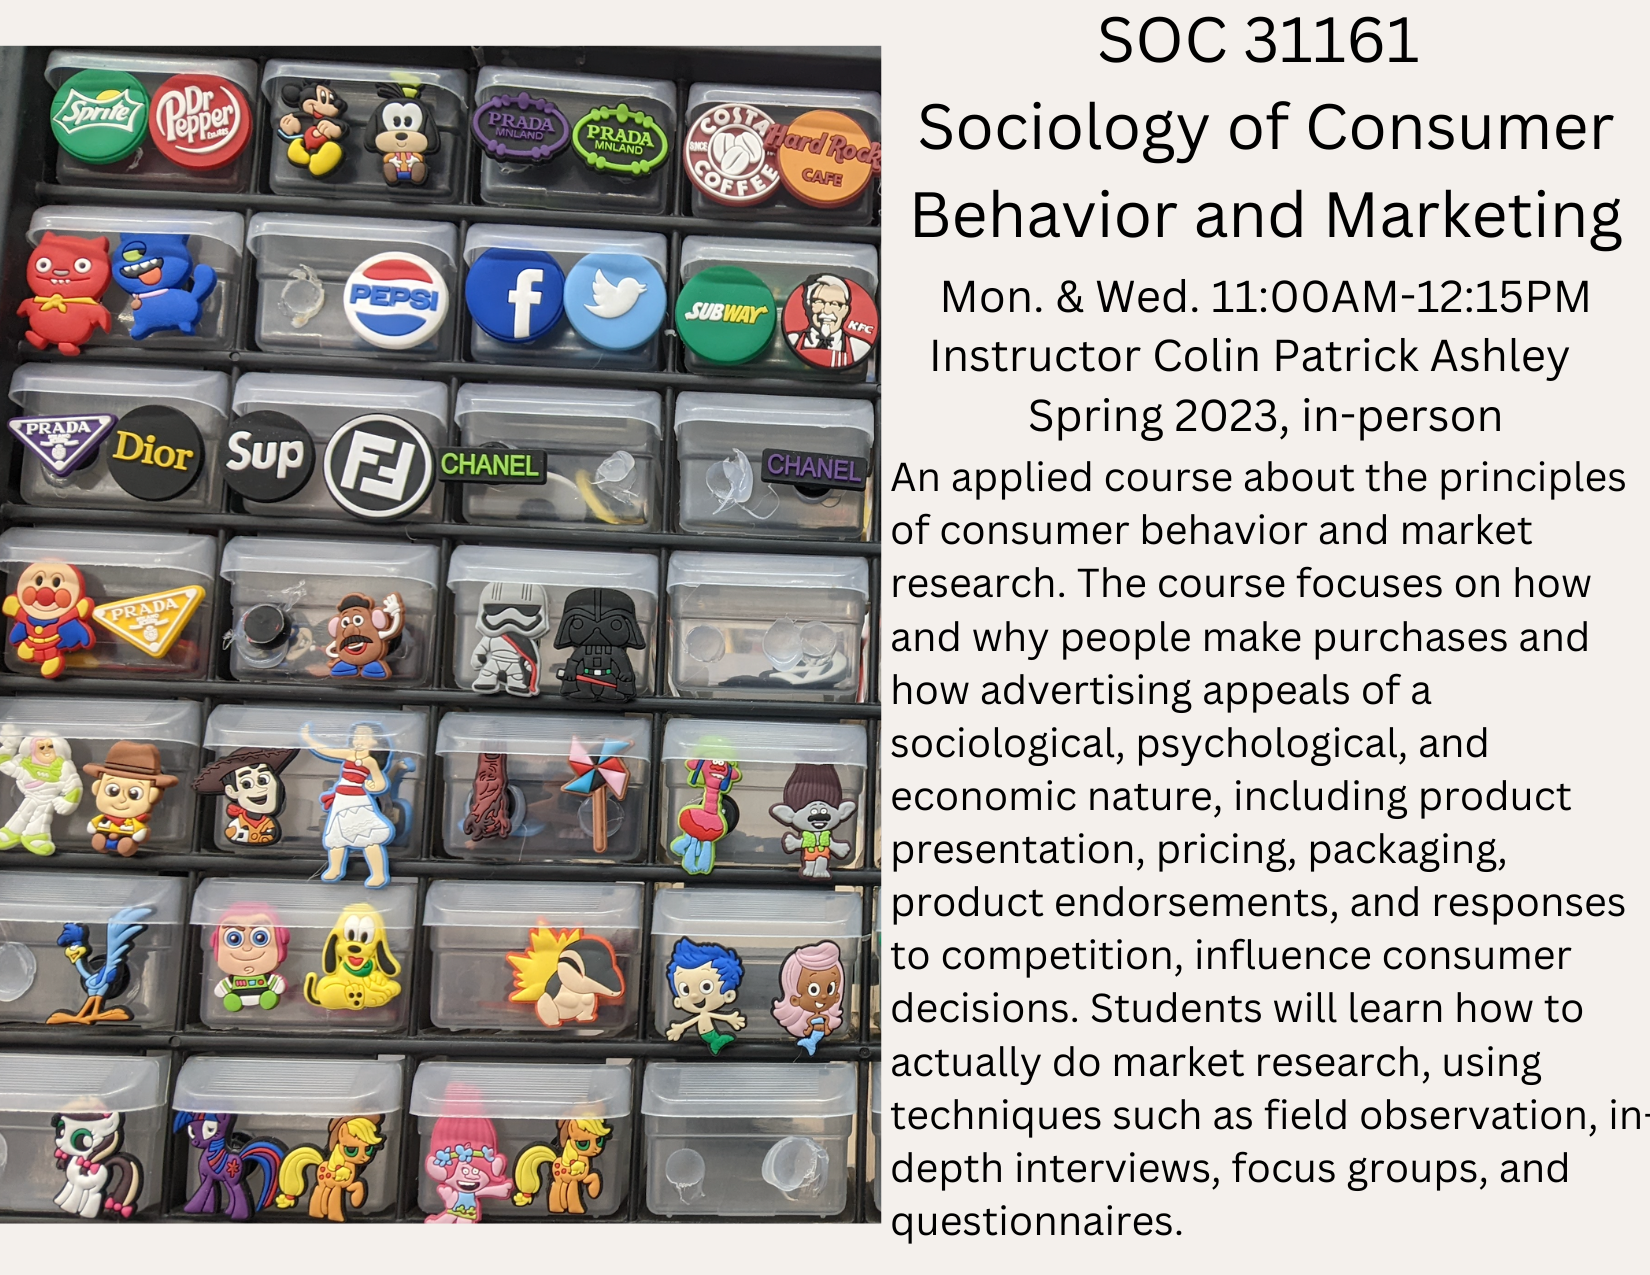 Colin Powell School CCNY Sociology SOC 31161 Sociology of Consumer Behavior and Marketing Course